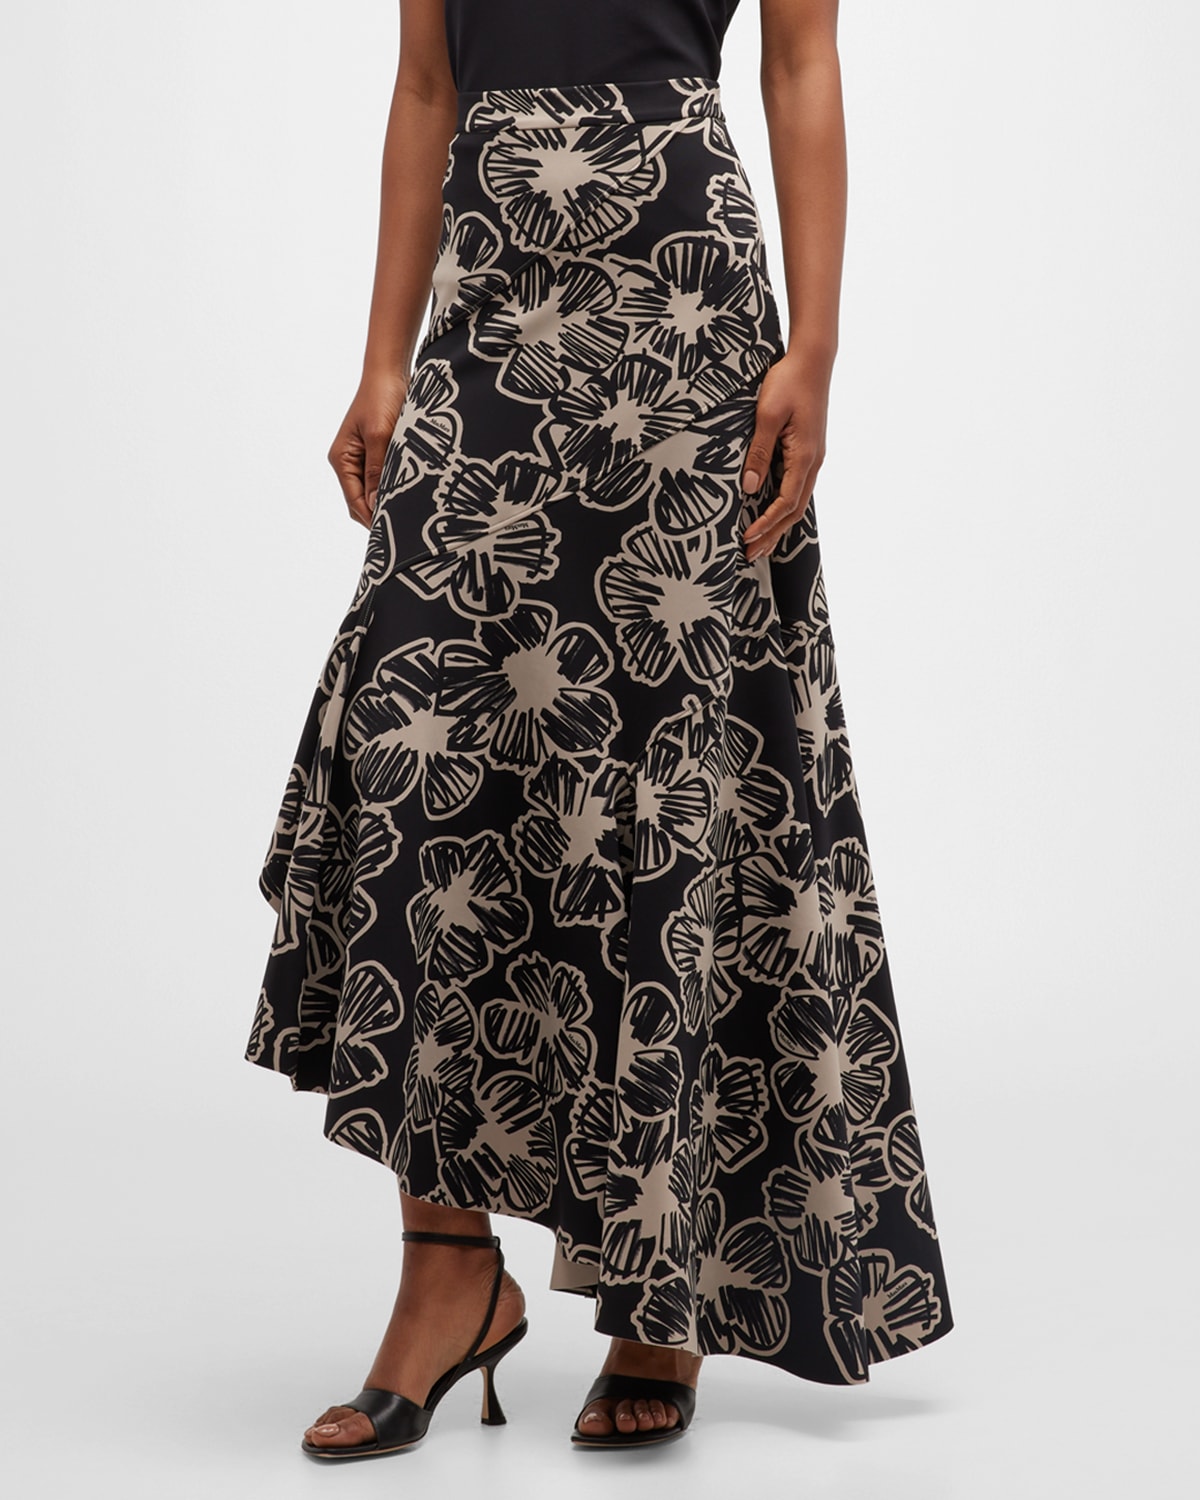 Ilex Scribble Floral-Print Paneled High-Low Skirt